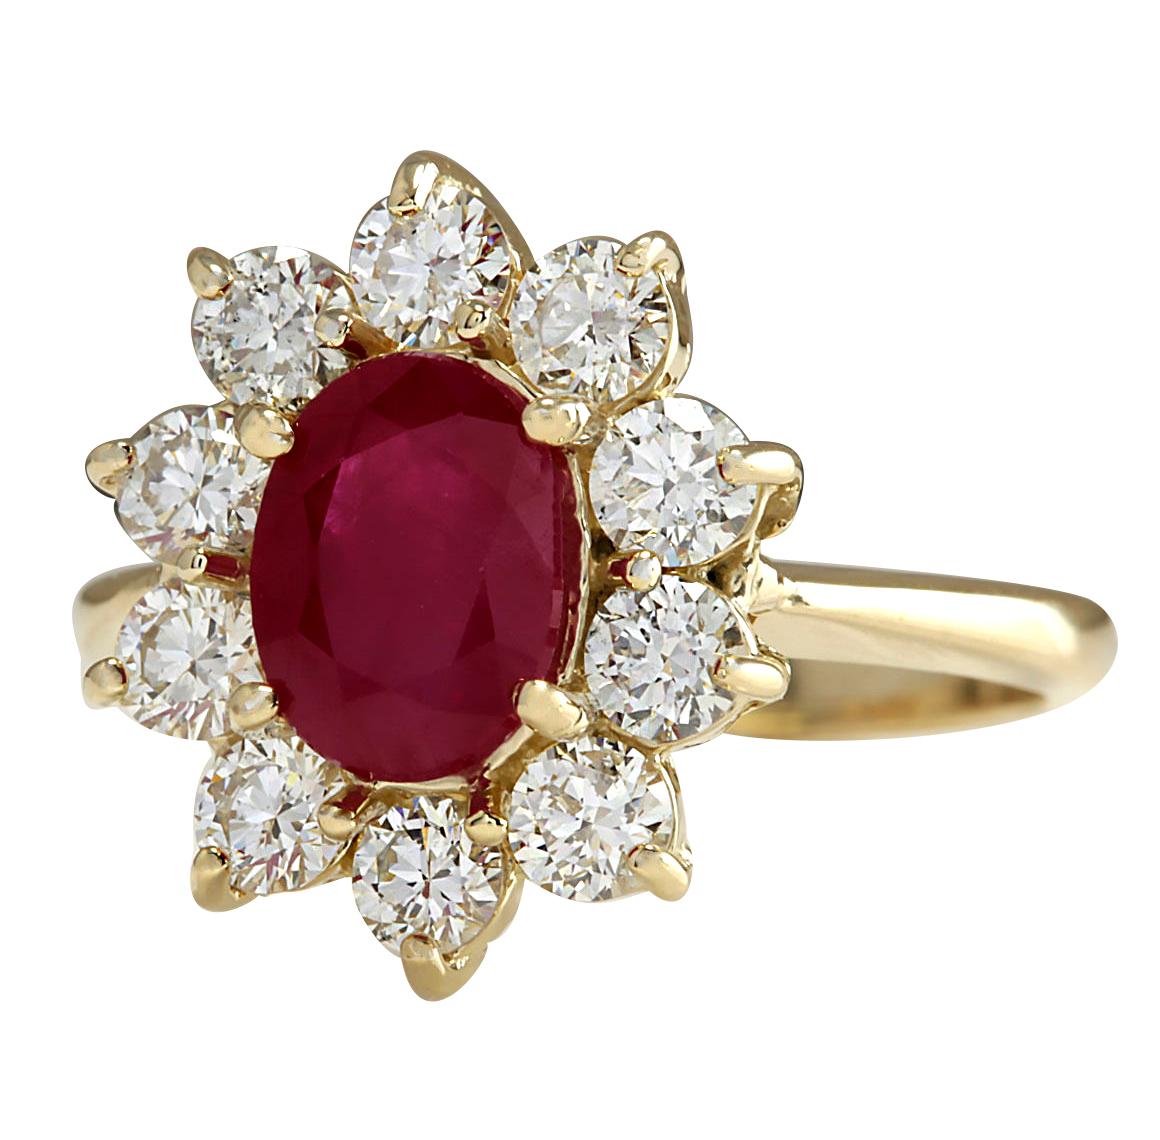 2.90 Carat Natural Ruby 14 Karat Yellow Gold Diamond Ring
Stamped: 14K Yellow Gold
Total Ring Weight: 4.2 Grams
Total Natural Ruby Weight is 1.77 Carat (Measures: 8.00x6.00 mm)
Color: Red
Total Natural Diamond Weight is 1.13 Carat
Color: F-G,